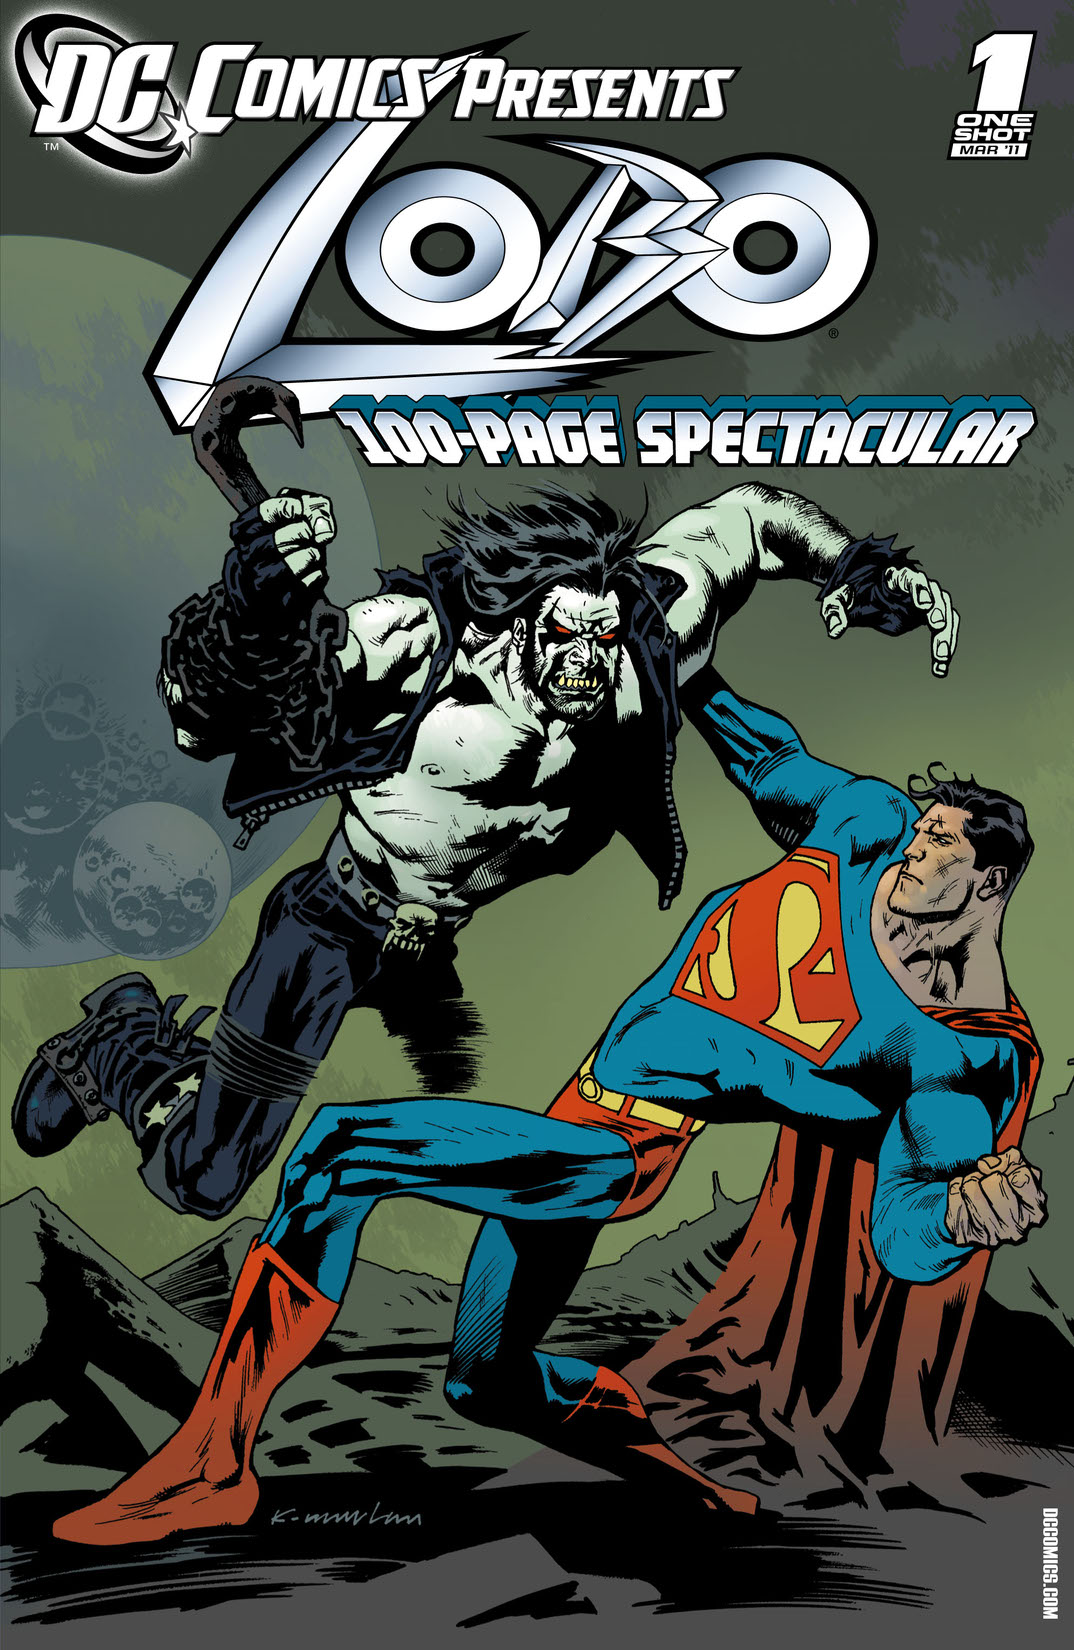 DC Comics Presents: Lobo (2011-) #1 preview images